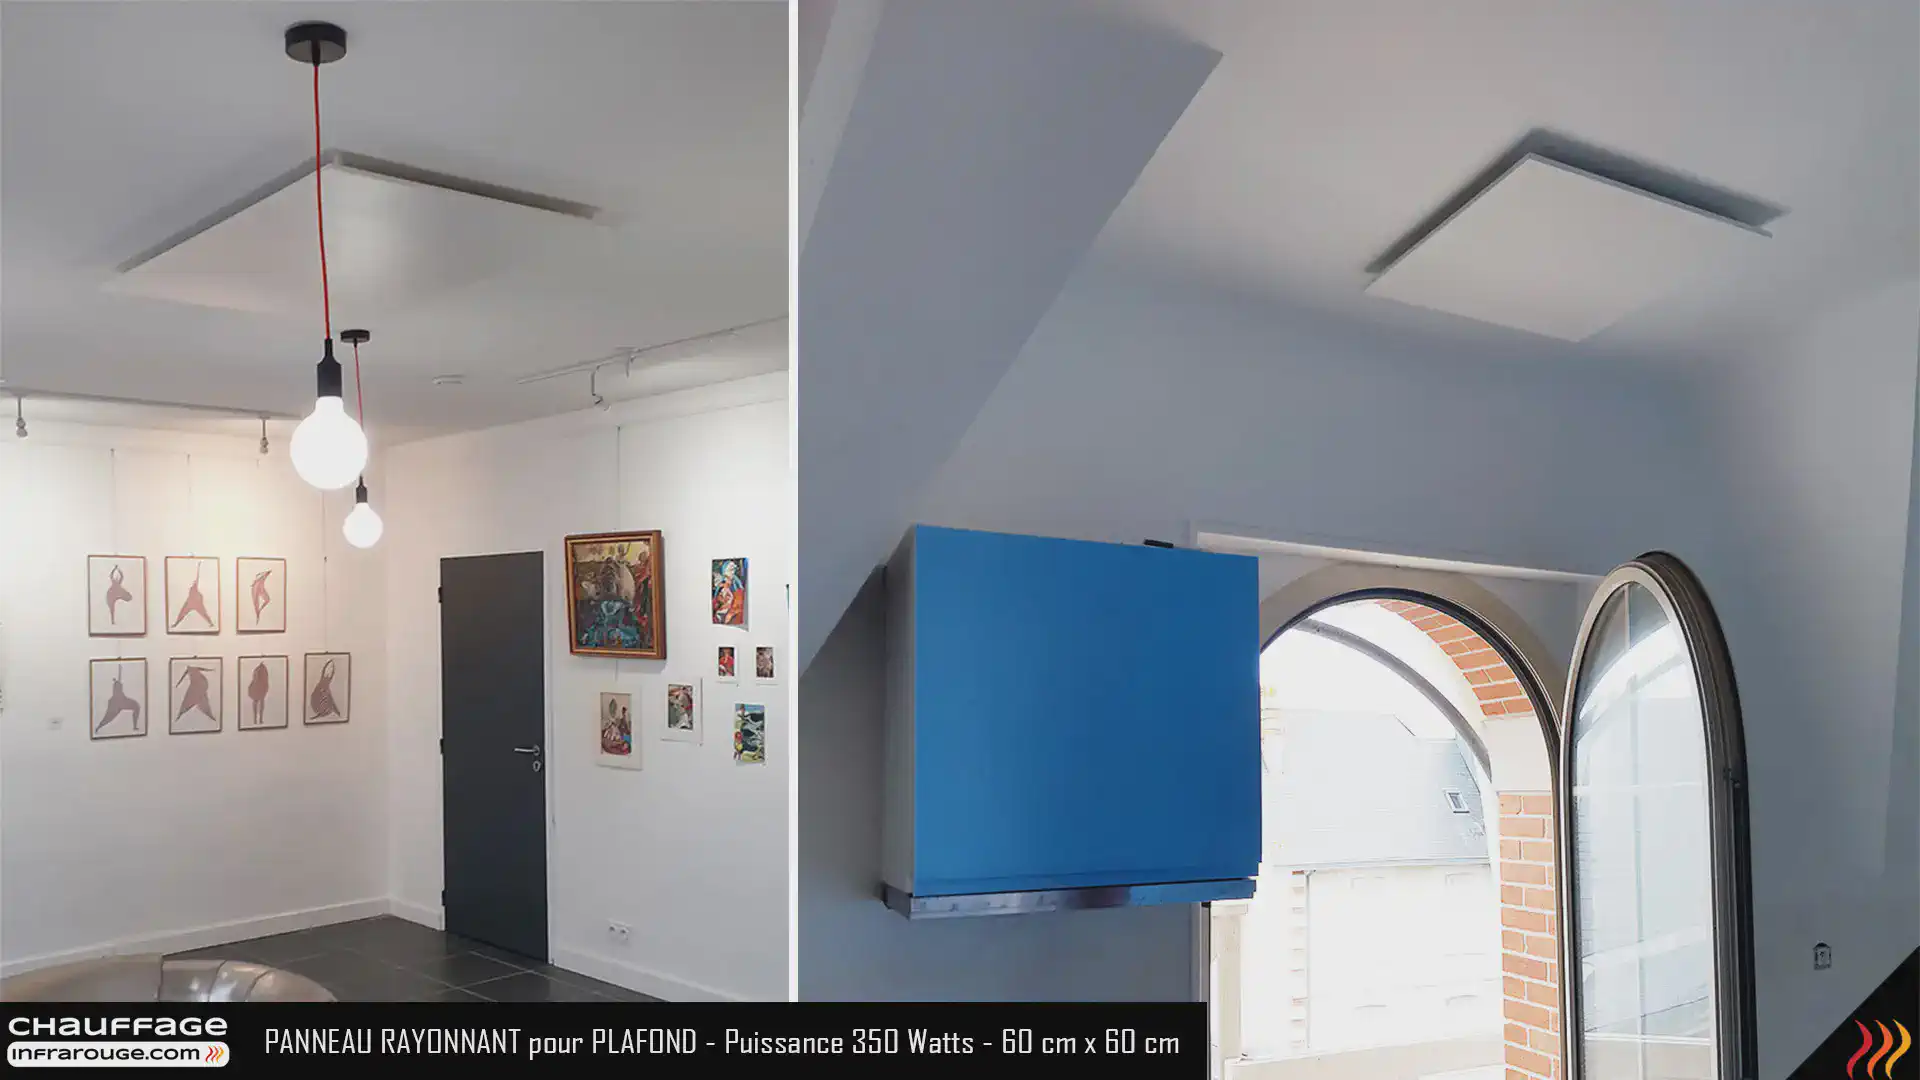 Panneau rayonnant infrarouge Heat4all extra plat 350 Watts - 60 cm x 60 cm pose verticale, horizontale, murale, plafond, rampants musée cuisine